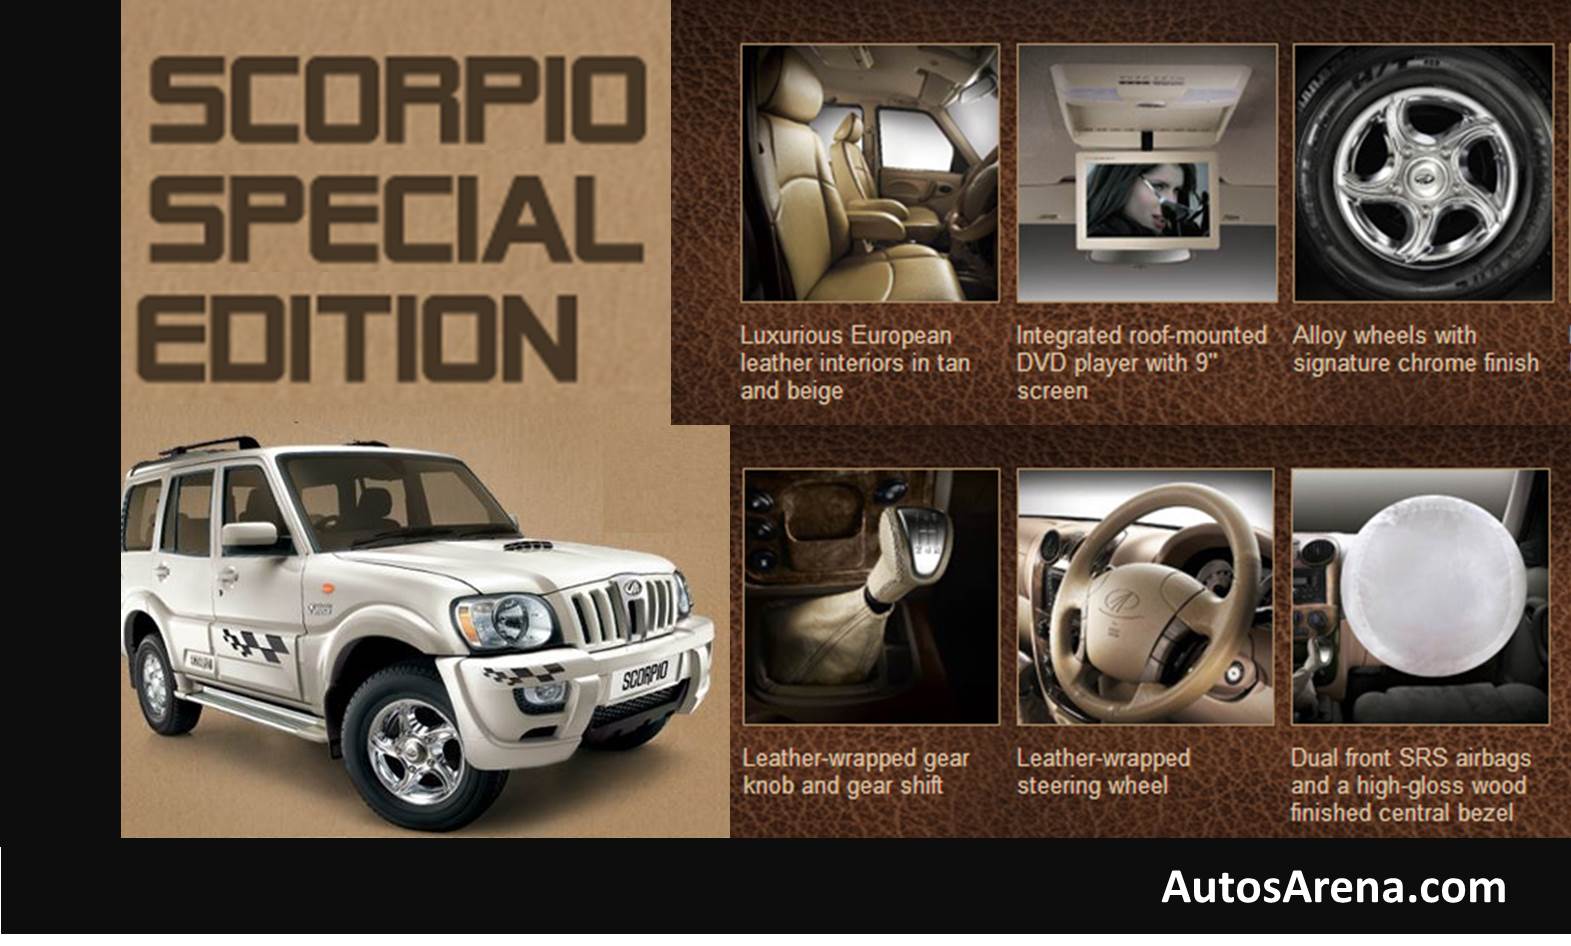 Mahindra Scorpio Special Edition features